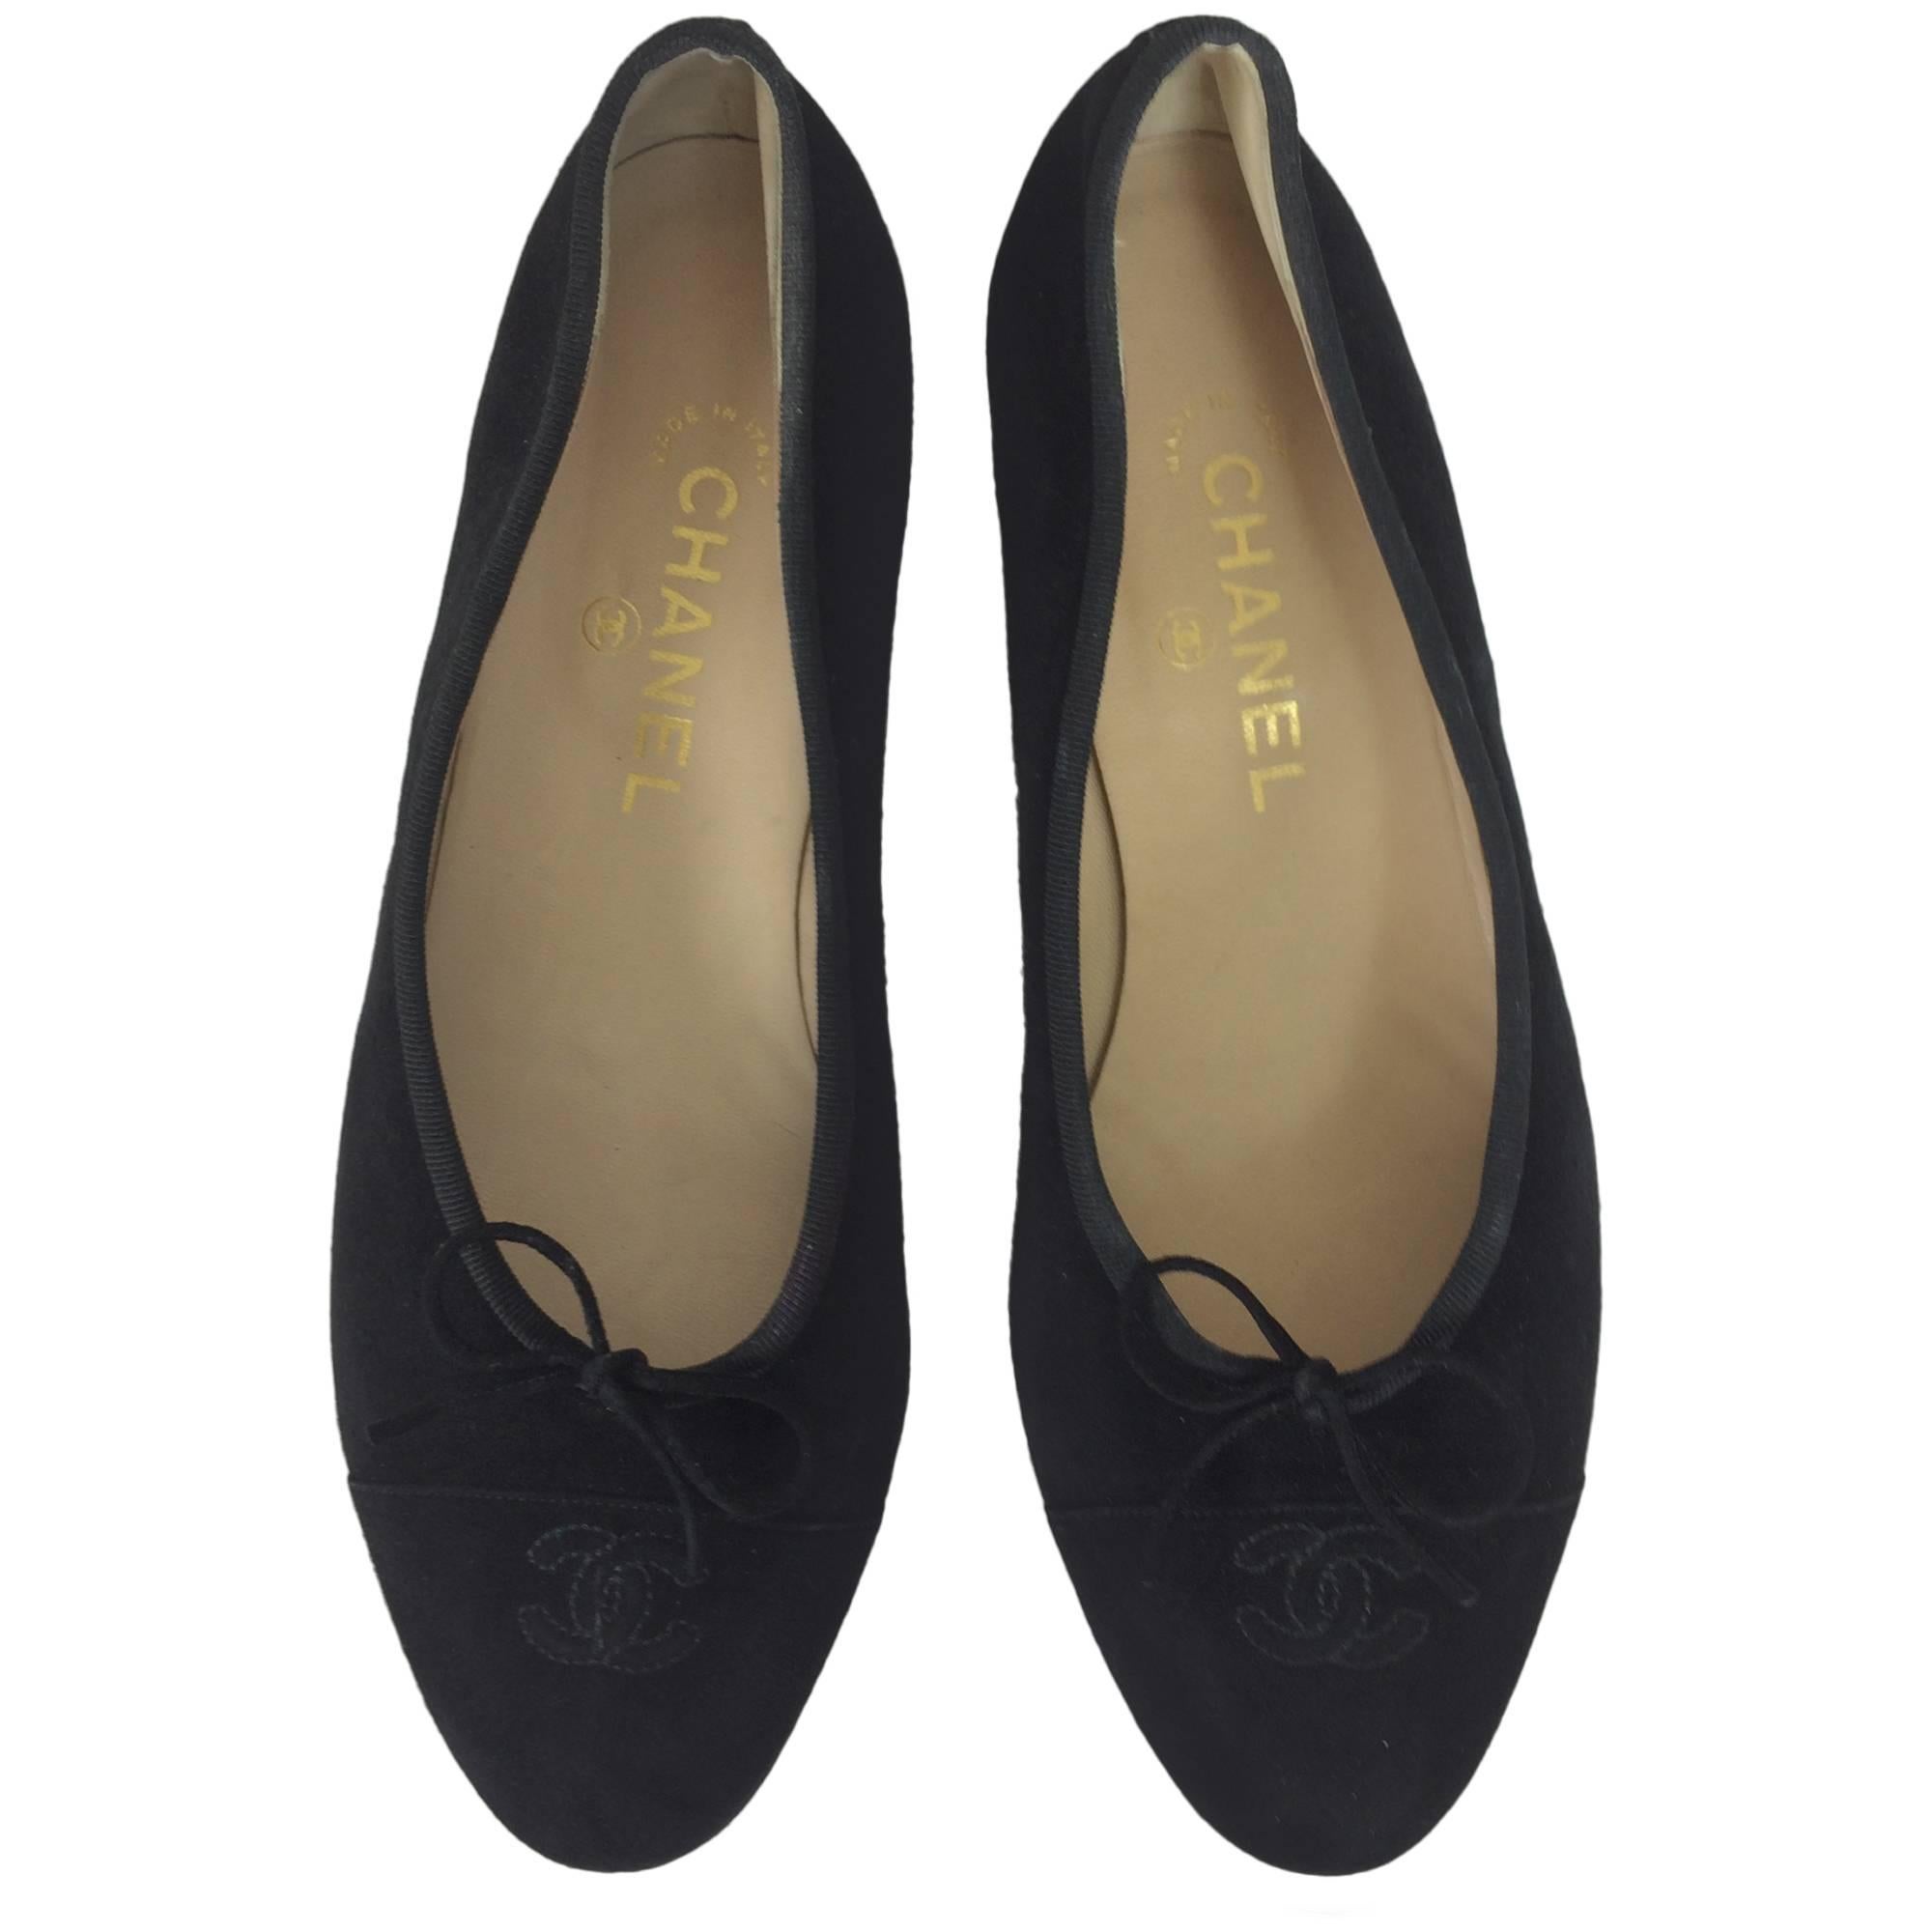 Chanel black suede logo toe ballet flats 40 1/2 M